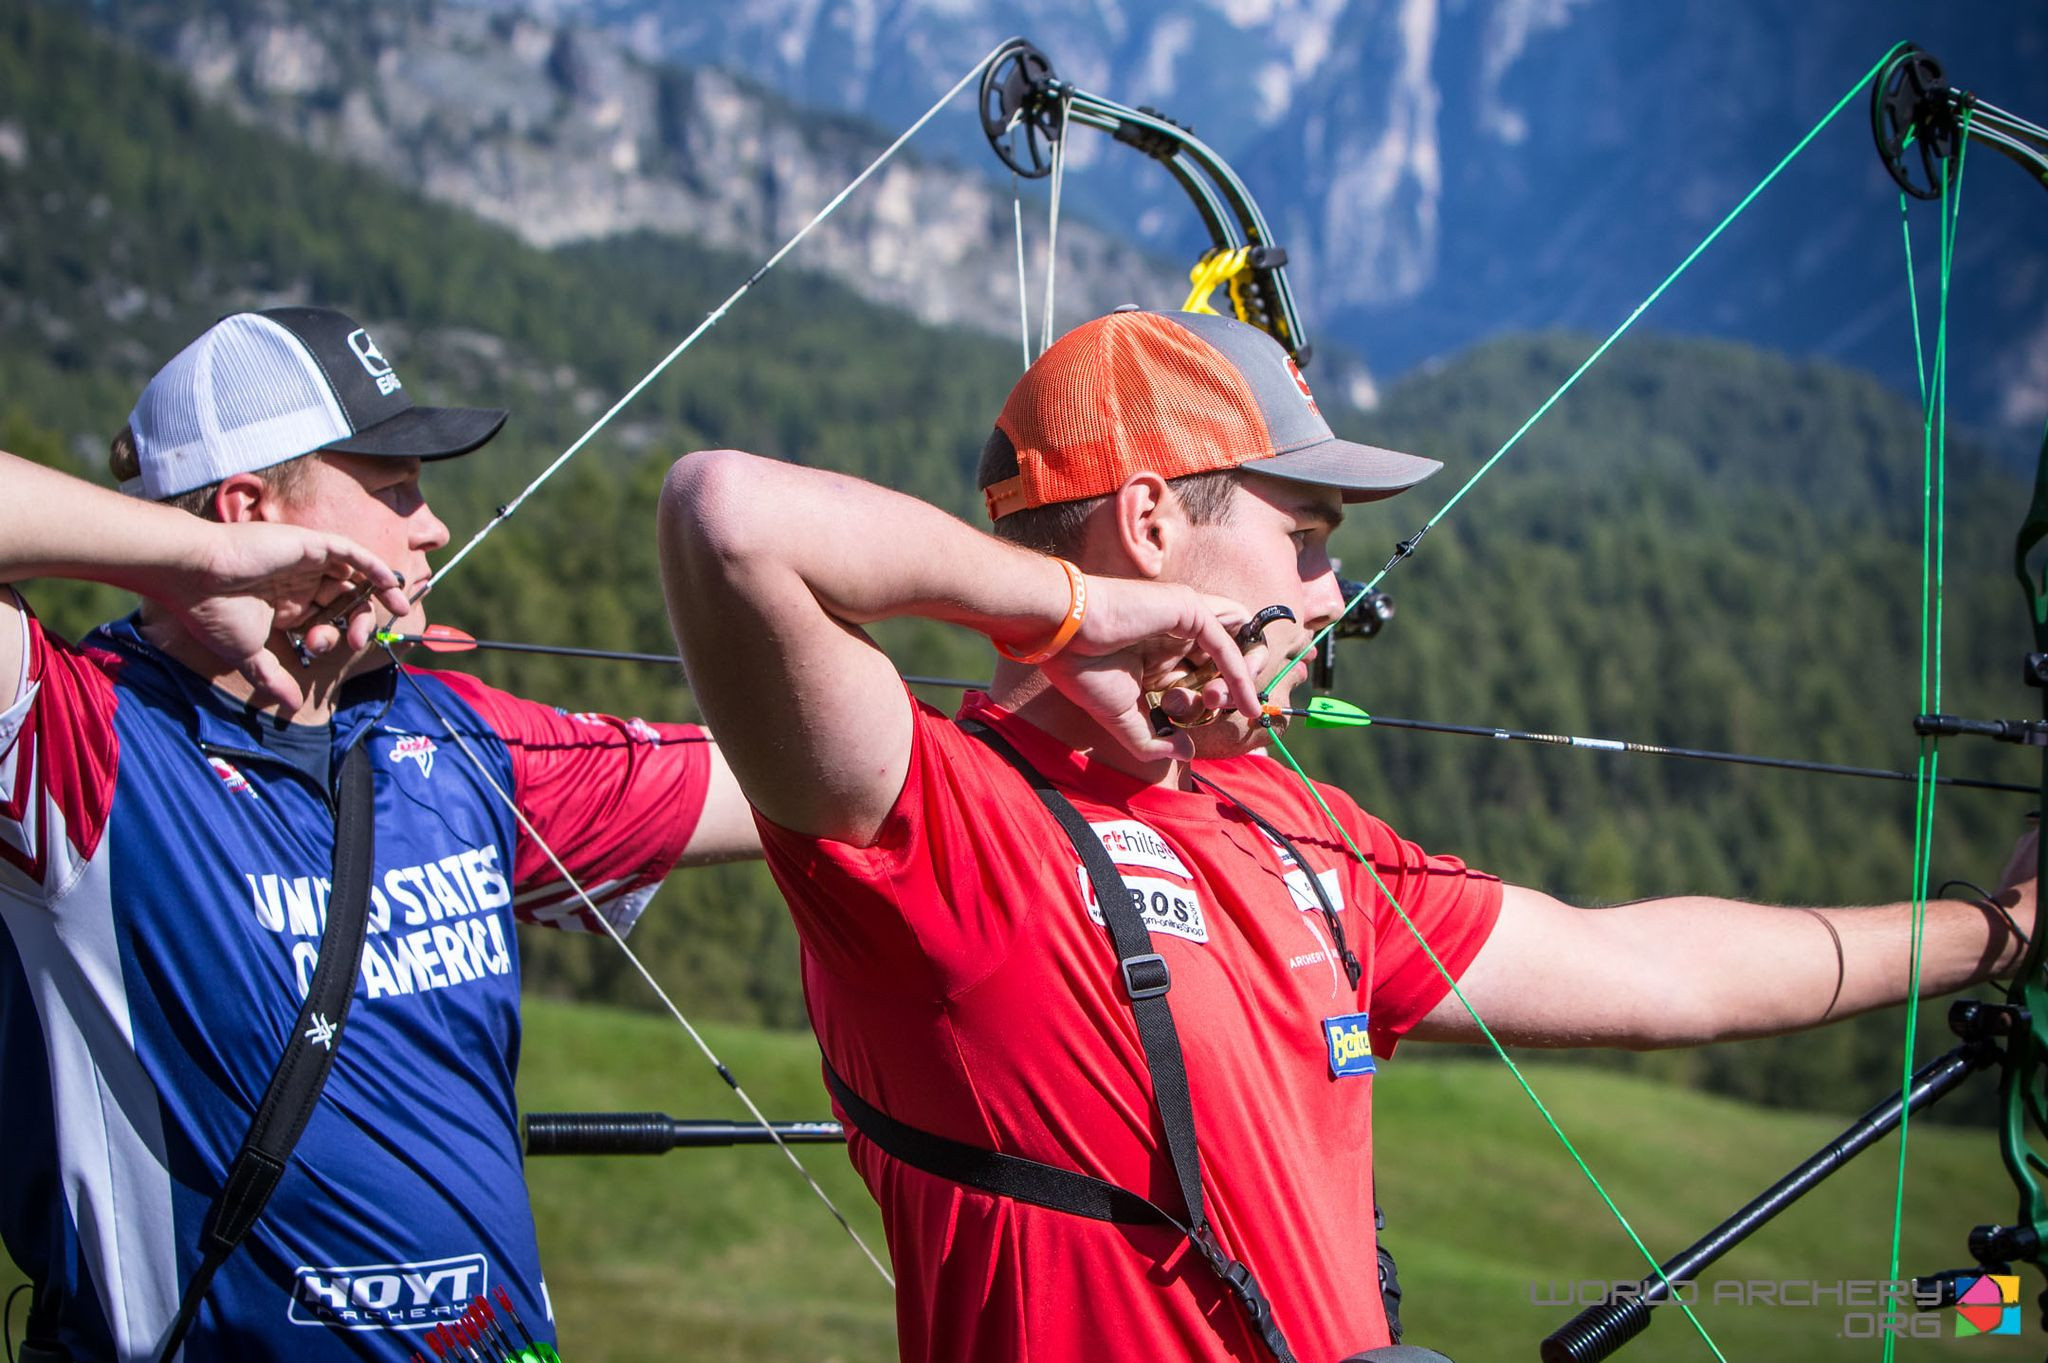 Nico Wiener will contest the men's compound final against Dutchman Mike Schloesser ©World Archery